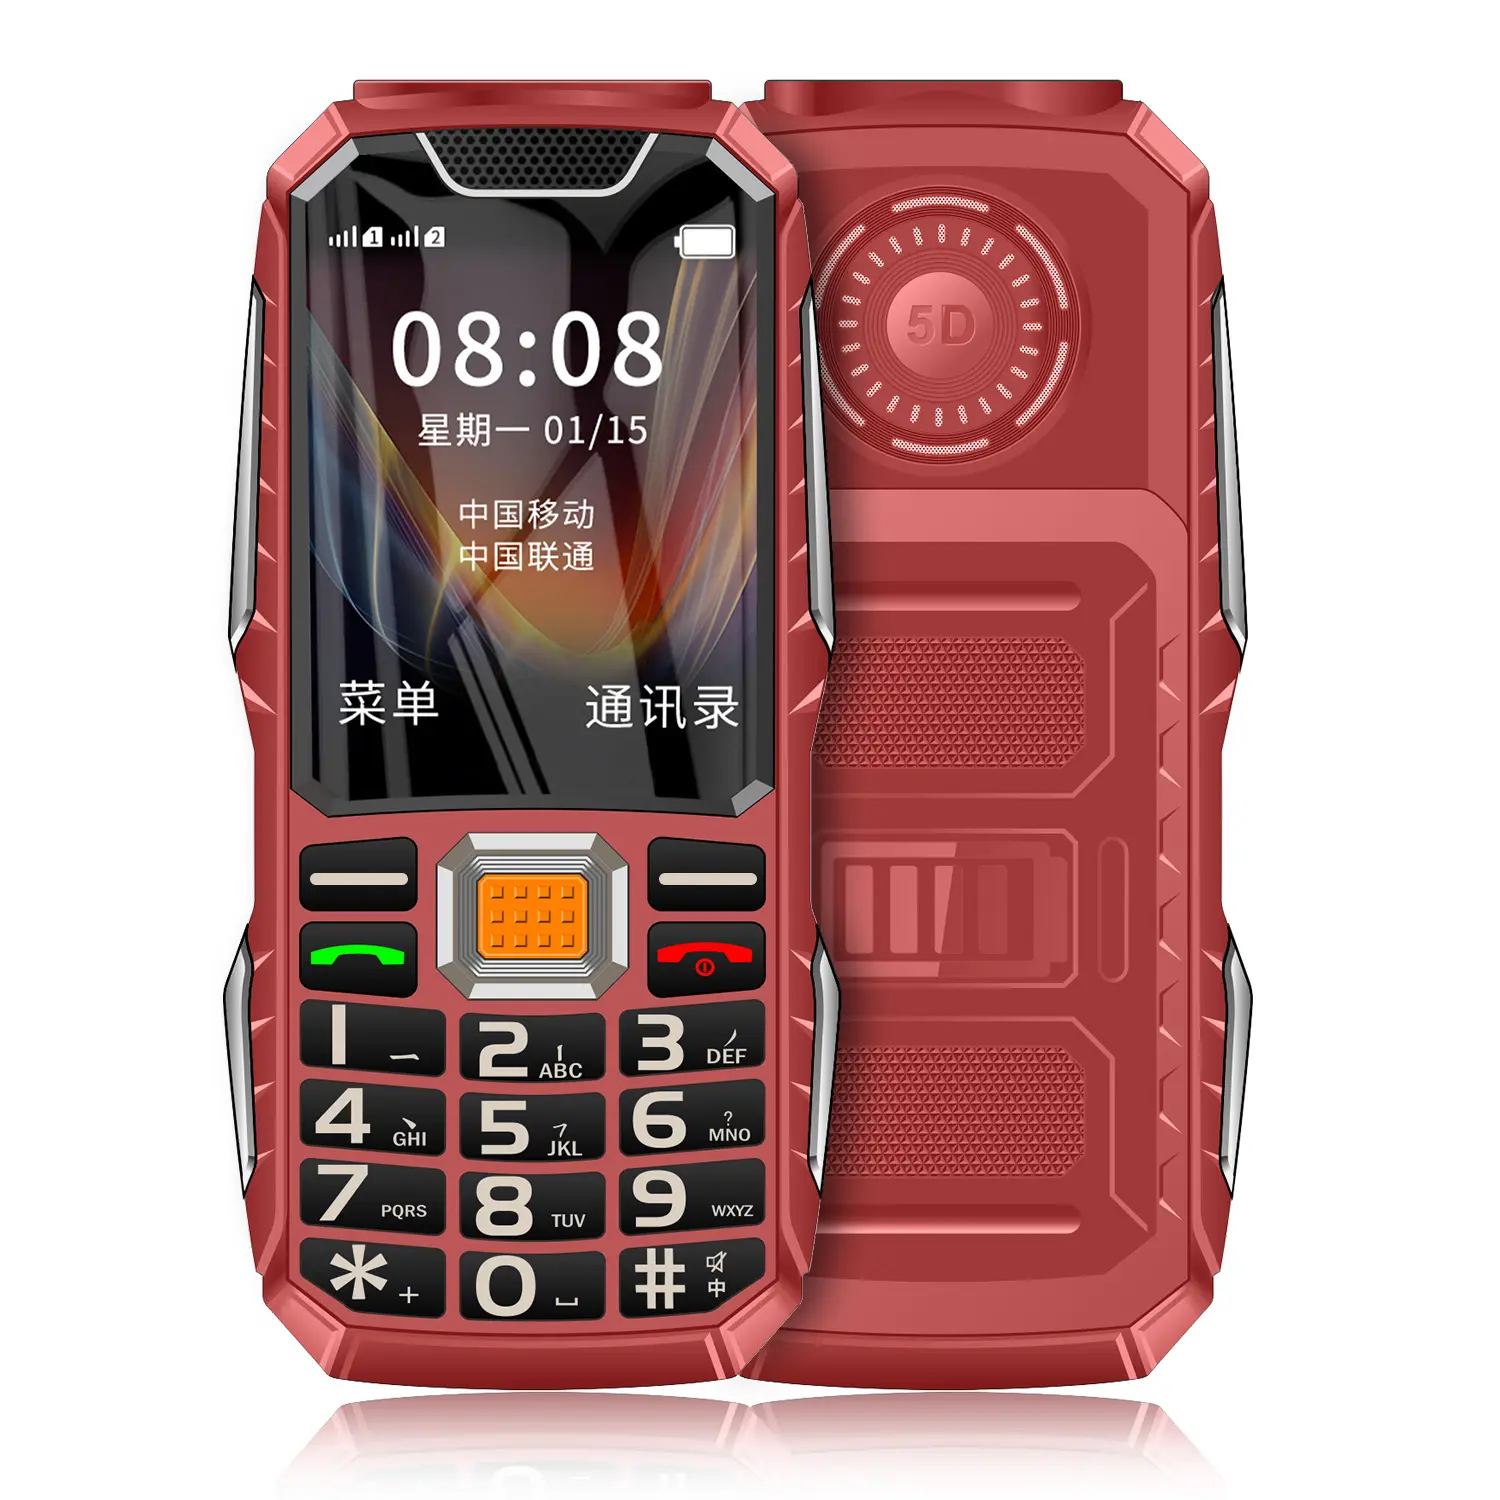 Ponsel Layar Besar W2019 Baterai Besar Standby Super Panjang Ponsel Murah Rugged Phone One Key Flashlight.